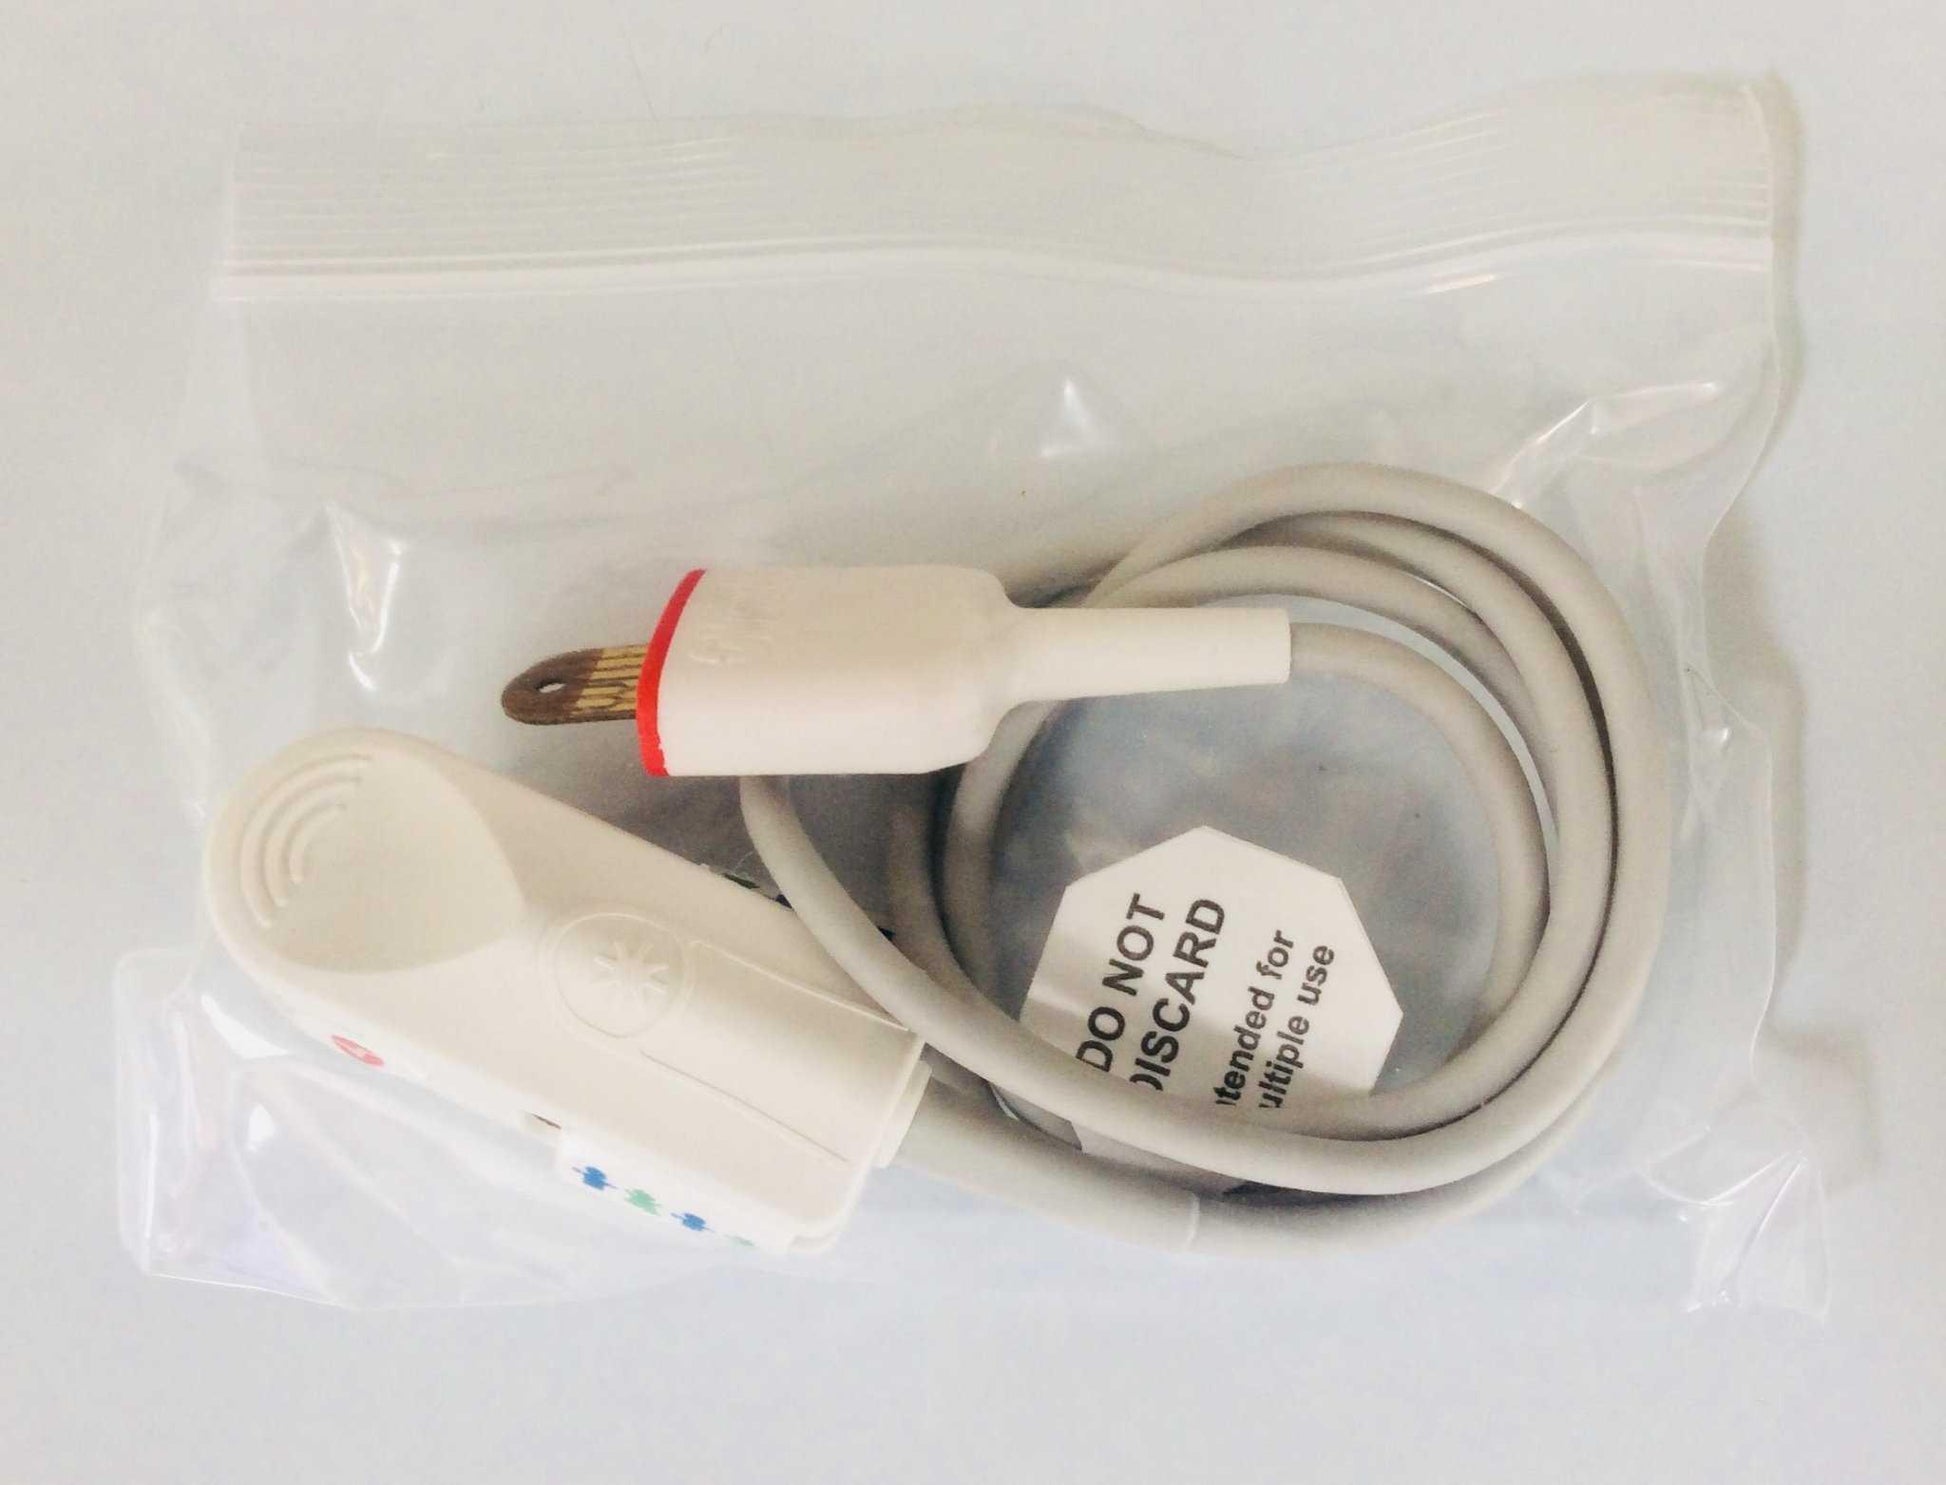 NEW Masimo LNOP DCI Adult SpO2 Reusable Finger Sensor 1269 Warranty FREE Shipping - MBR Medicals